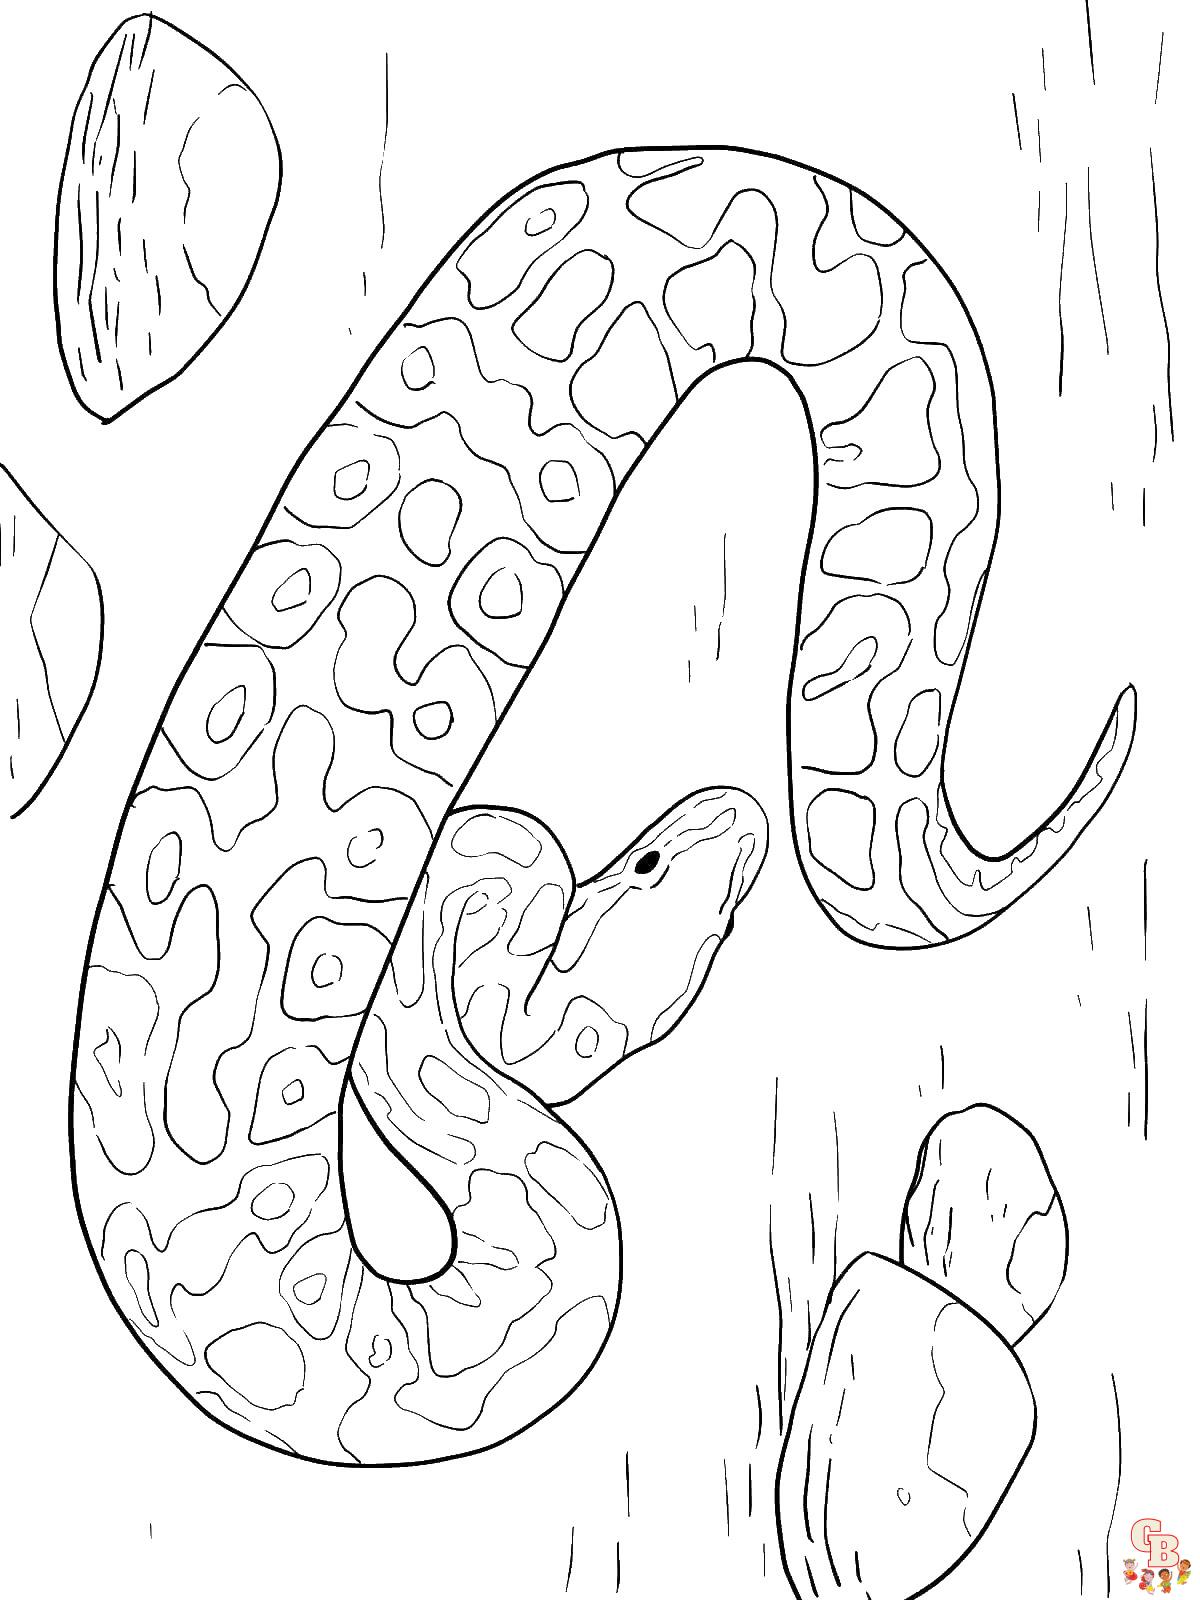 Anaconda coloring pages